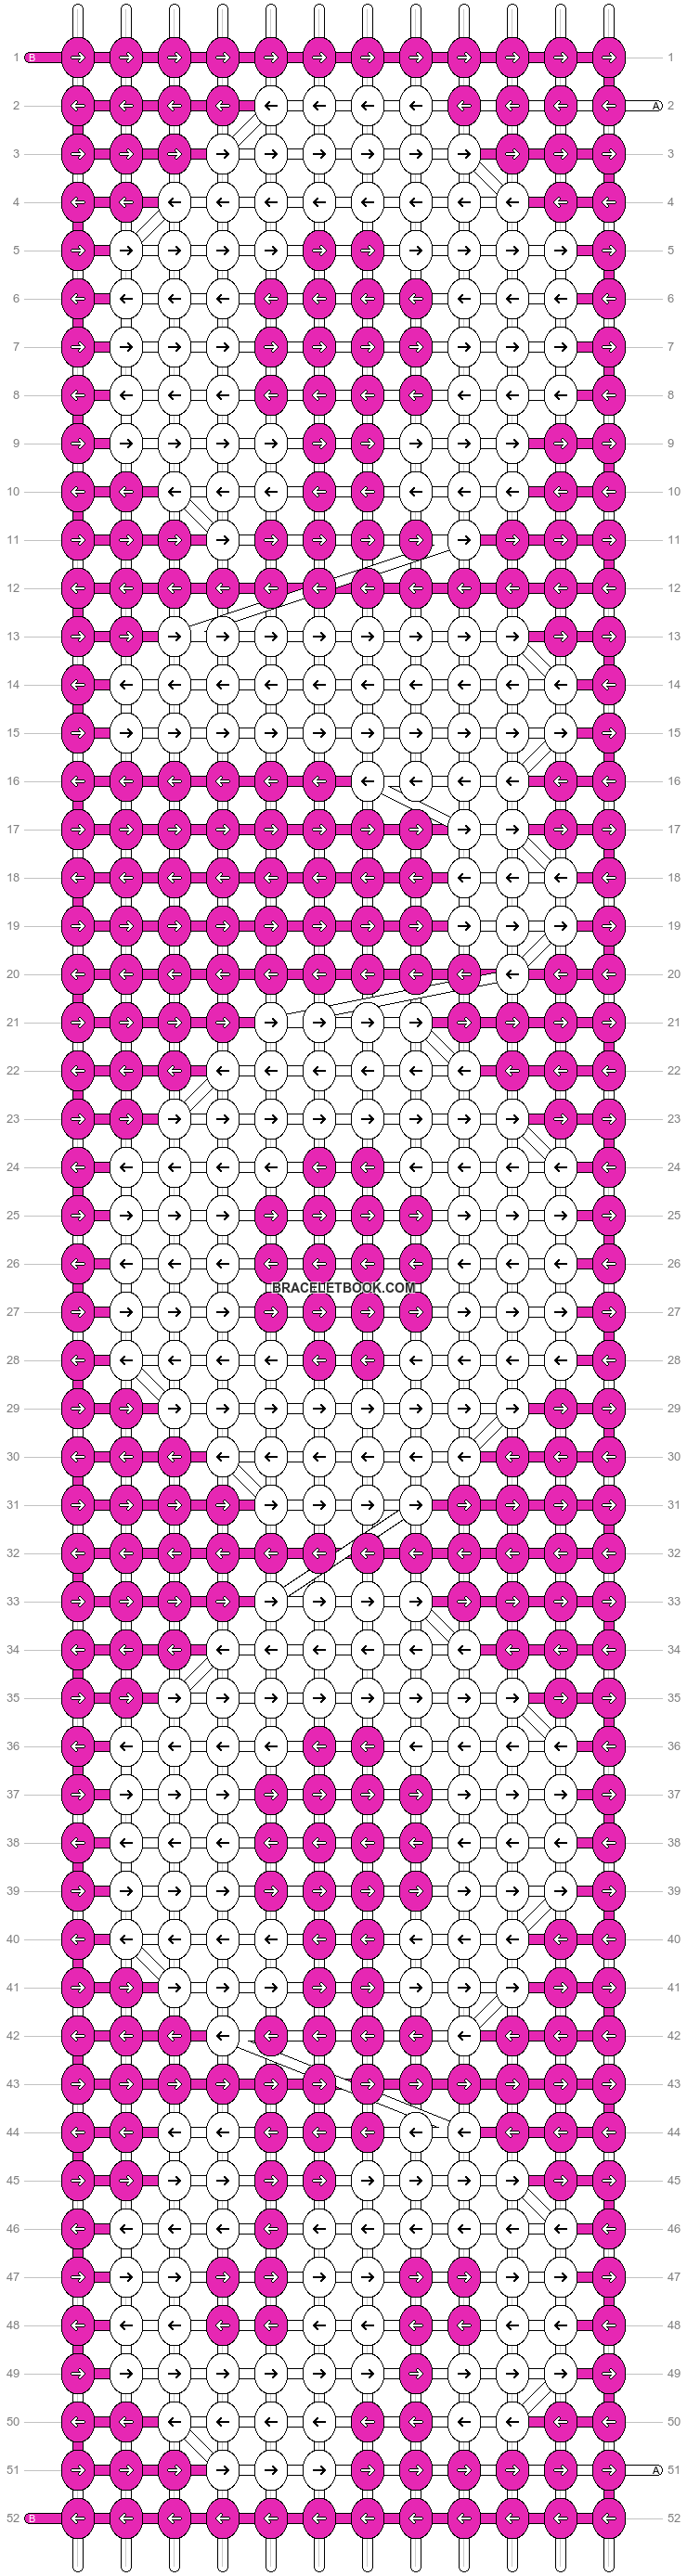 Alpha pattern #64184 variation #118212 pattern